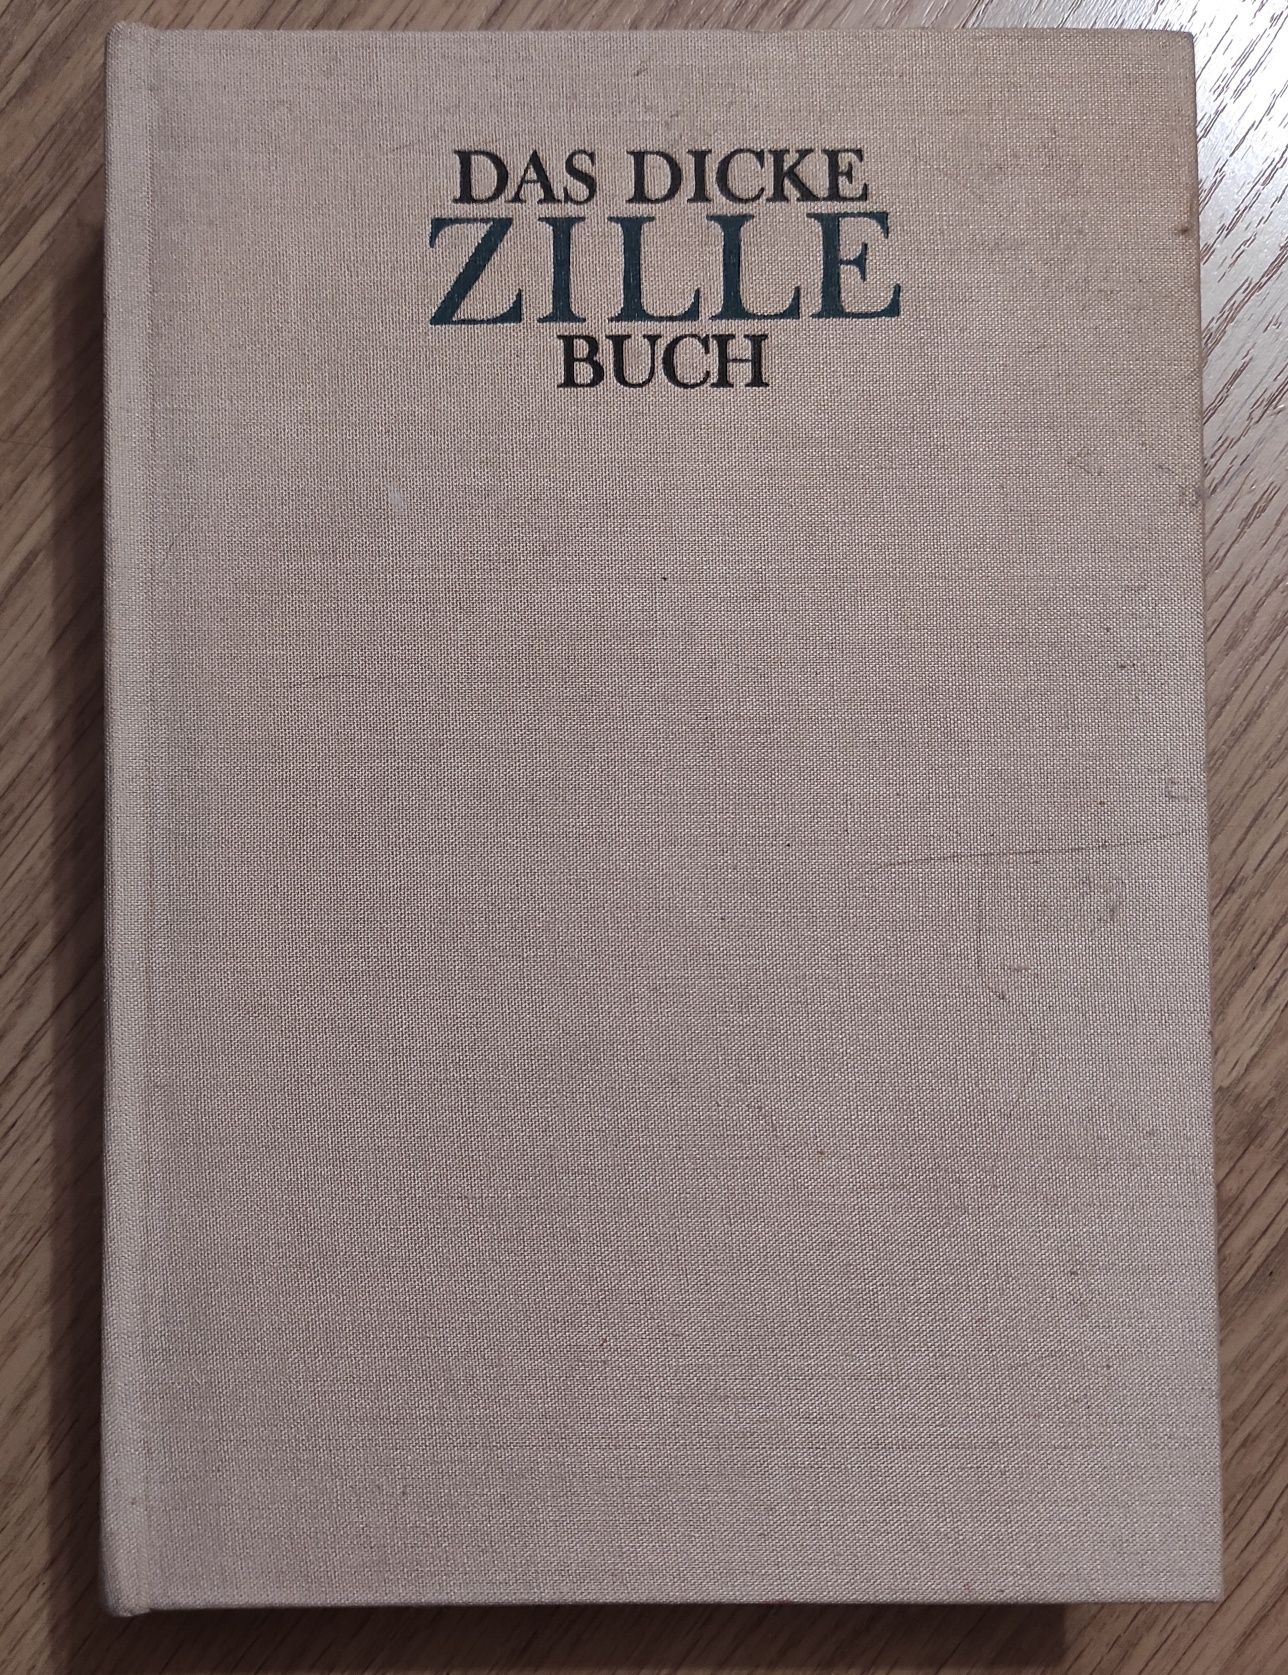 Das Dicke Zille Buch – Альбом иллюстраций Генриха Зилле